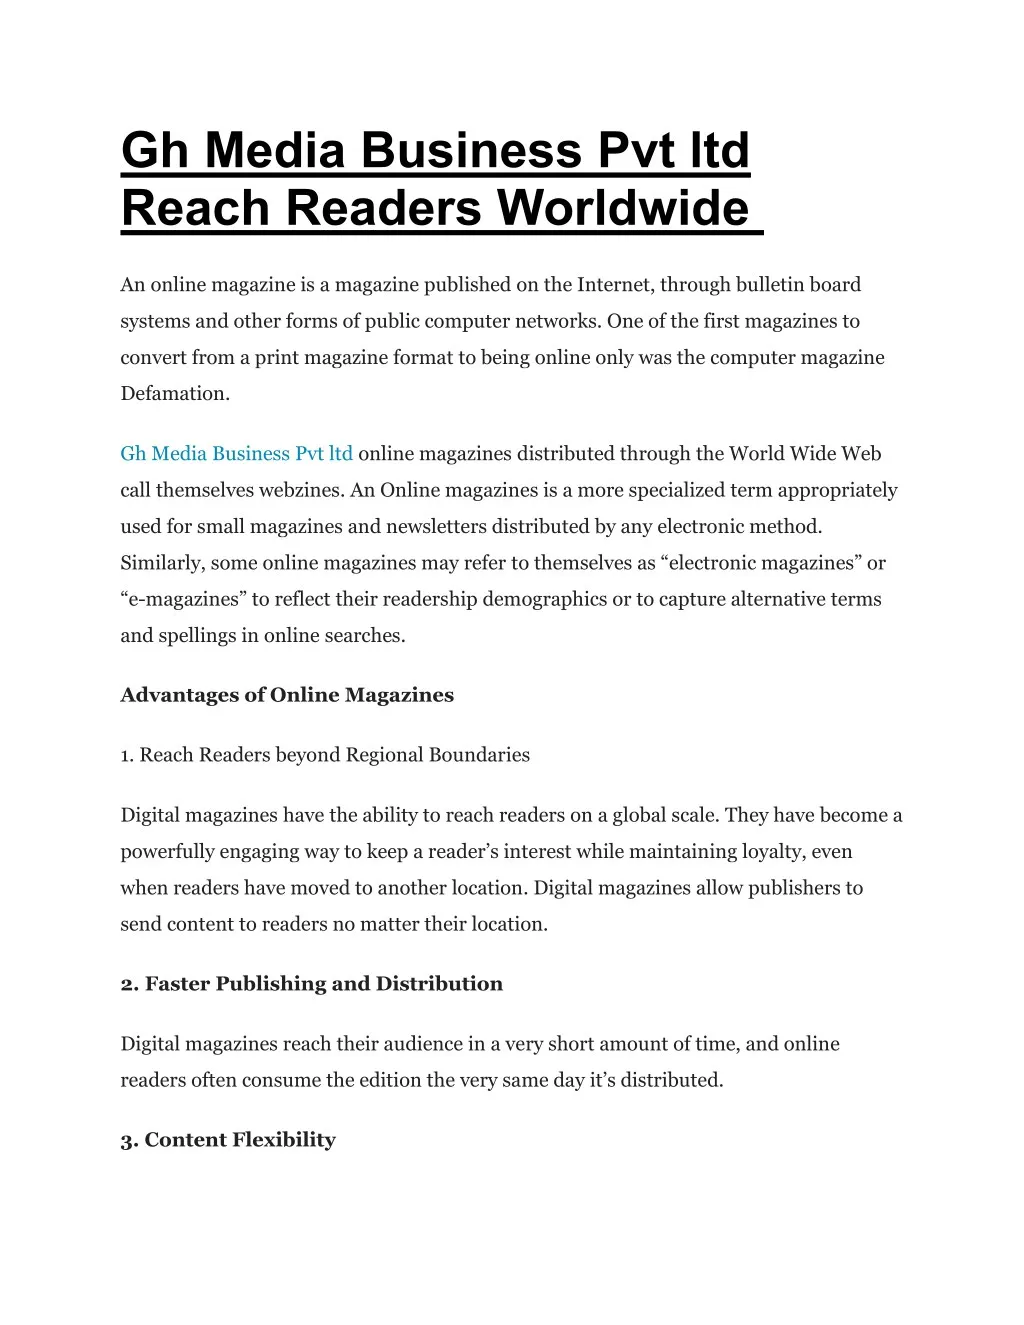 gh media business pvt ltd reach readers worldwide